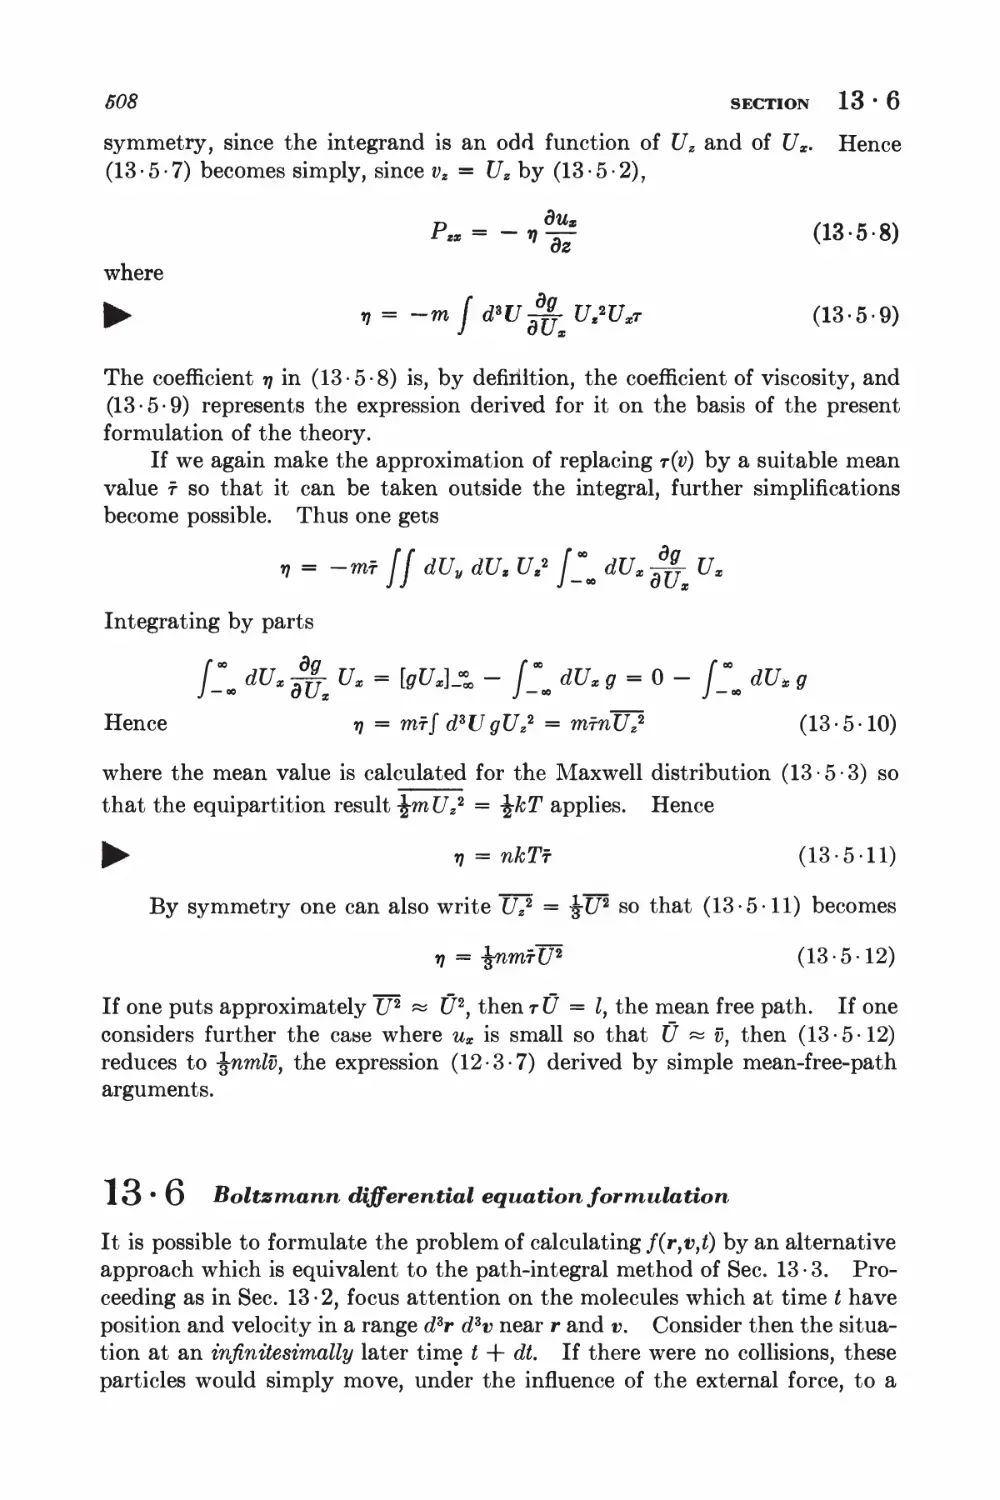 13.6 Boltzmann differential equation formulation